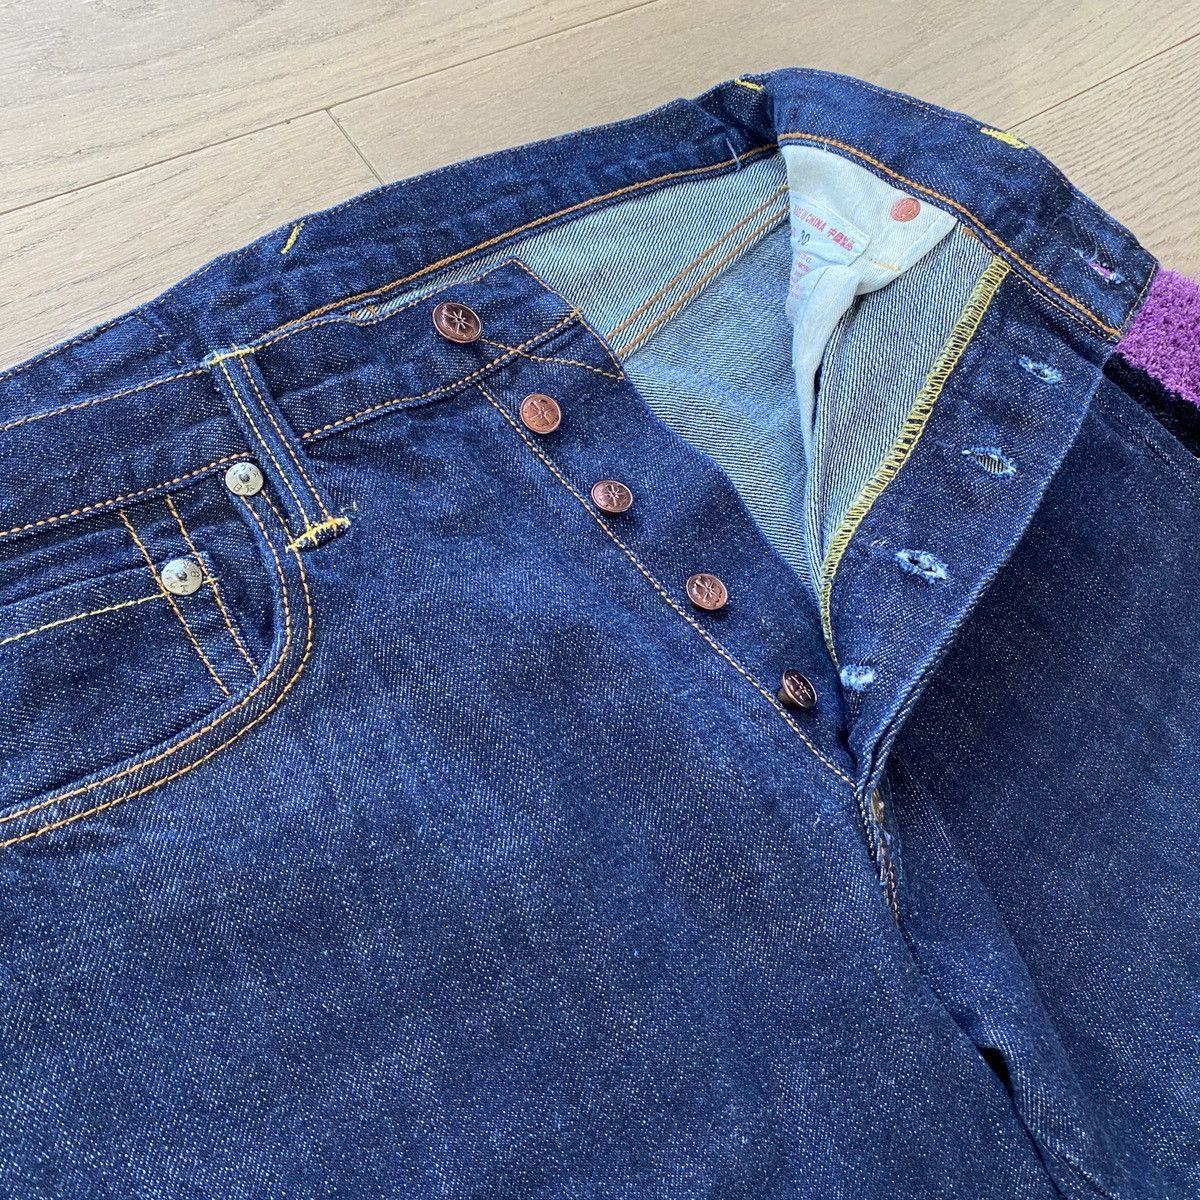 Vintage Evisu Multi Pockets Selvage Denim Jeans (Logo Embroidered) Size US 32 / EU 48 - 3 Thumbnail